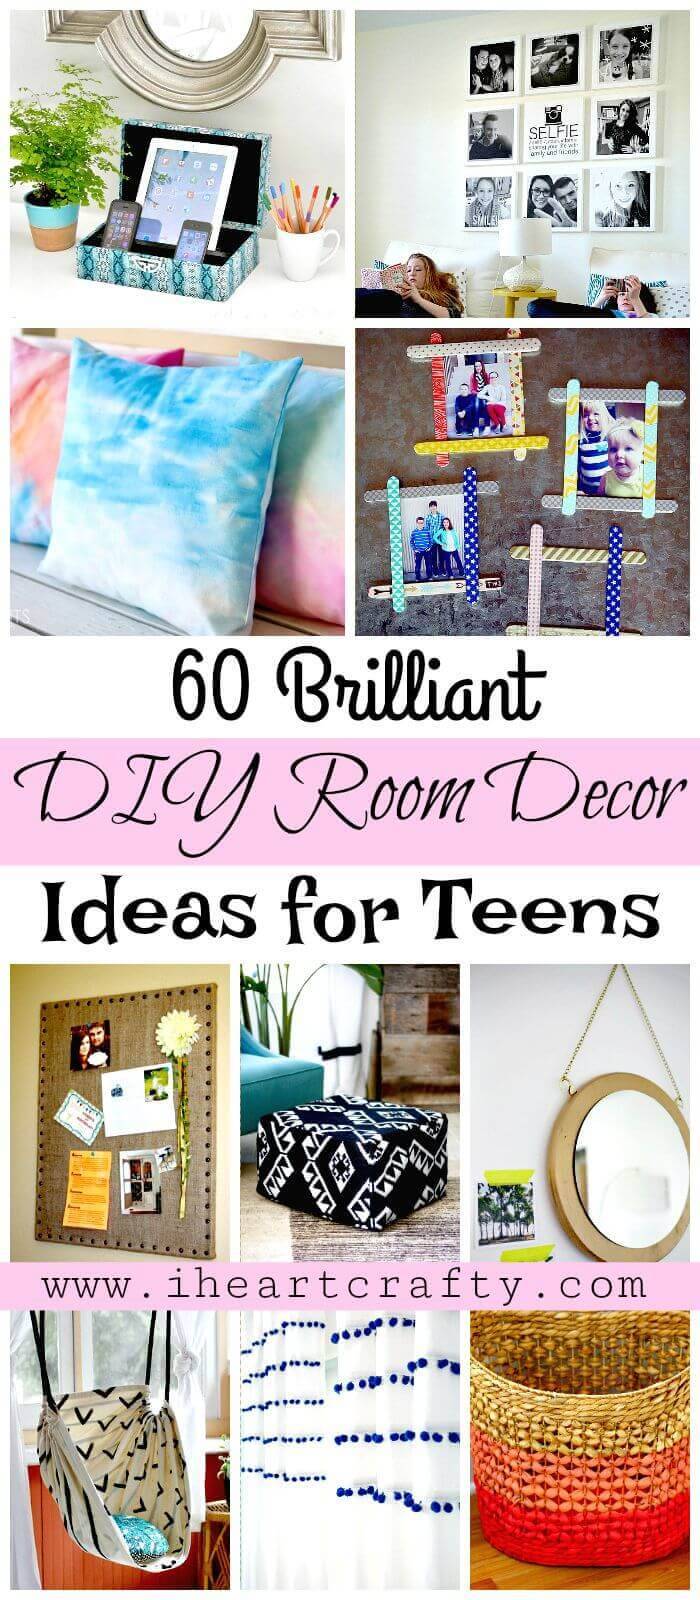 60 Brilliant Diy Room Decor Ideas For